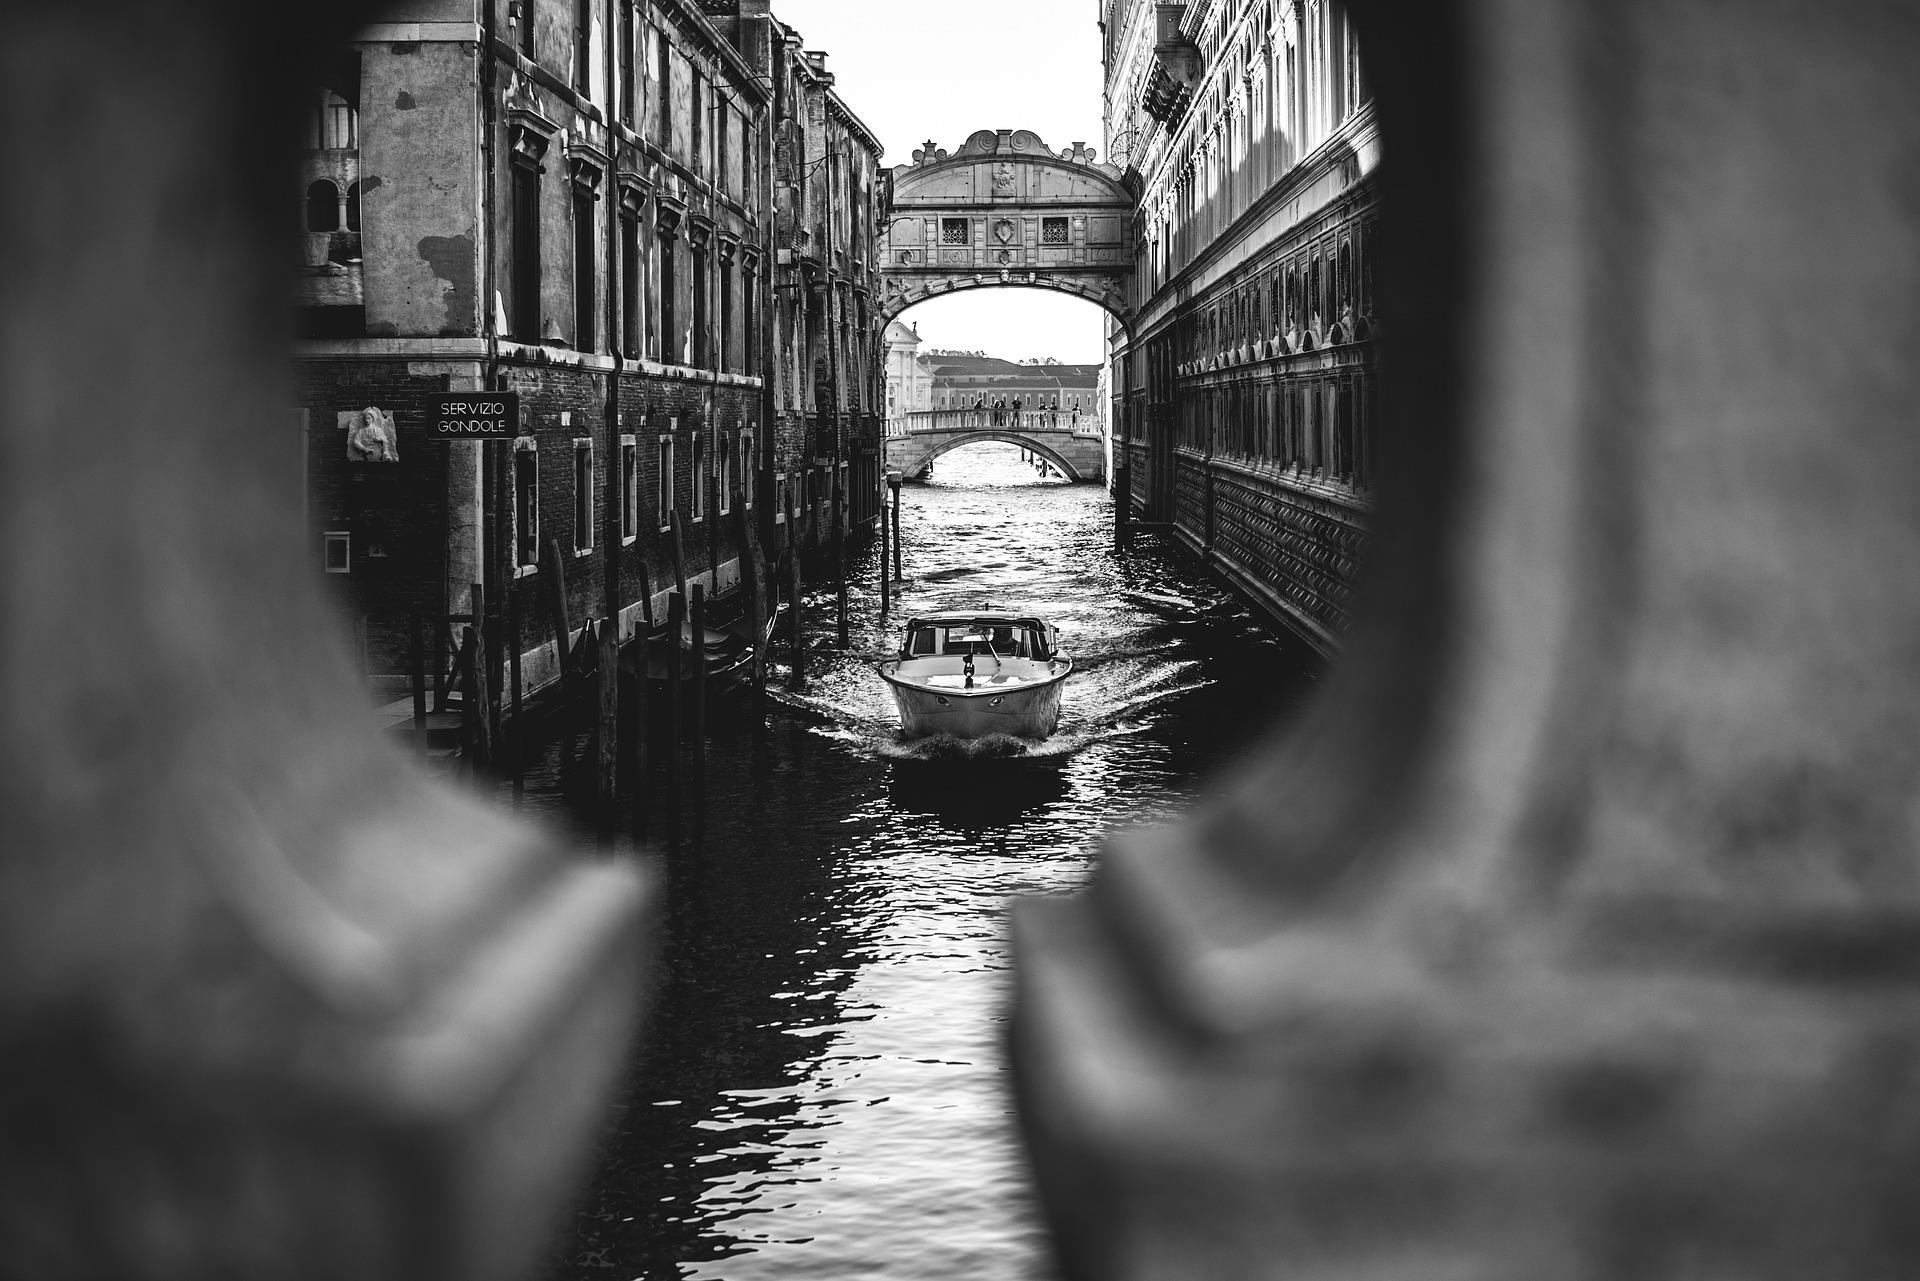 Excursión a Venecia desde Florencia